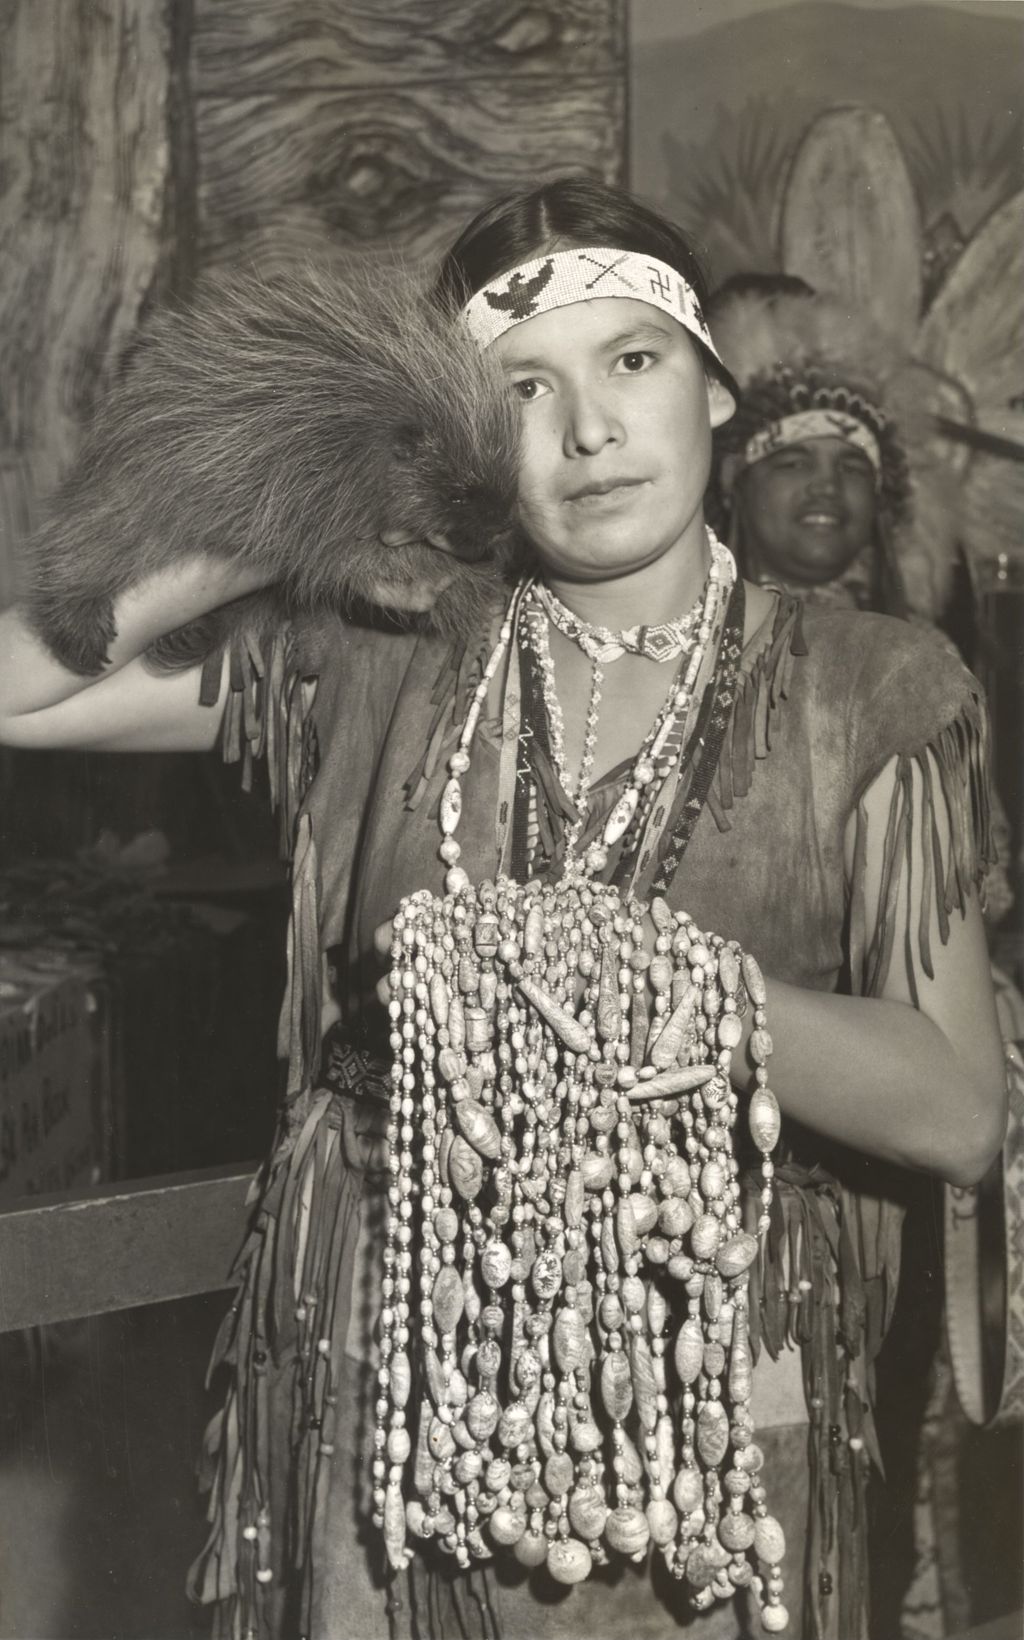 Miniature of Native American Indian at the South Dakota exhibit